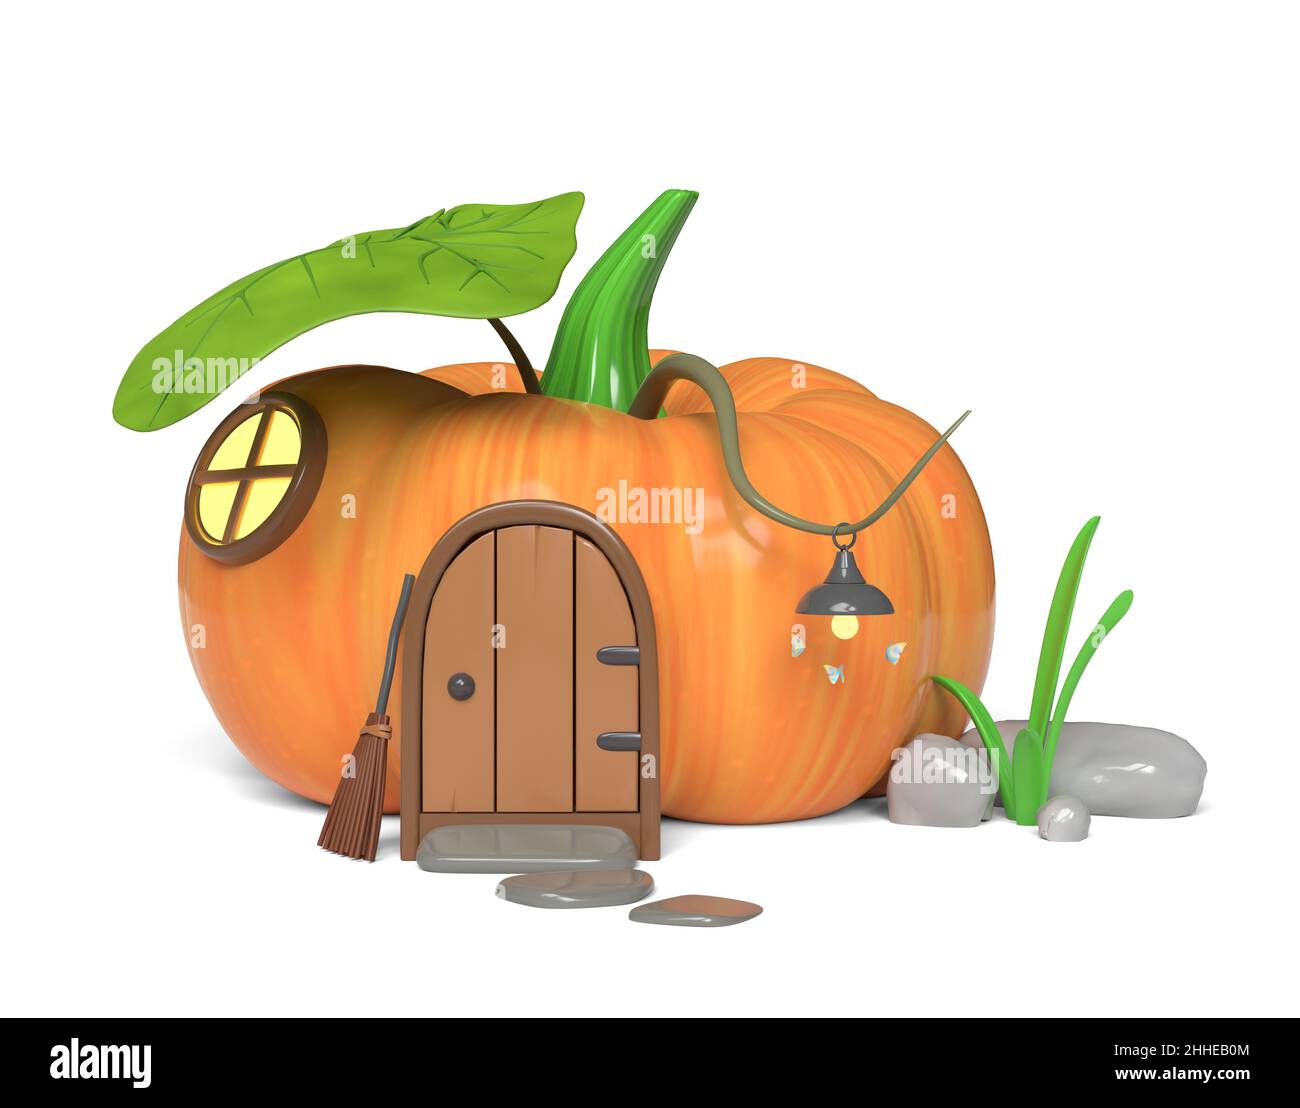 Cute cartoon pumpkin house. 3D illustration. Stock Photo